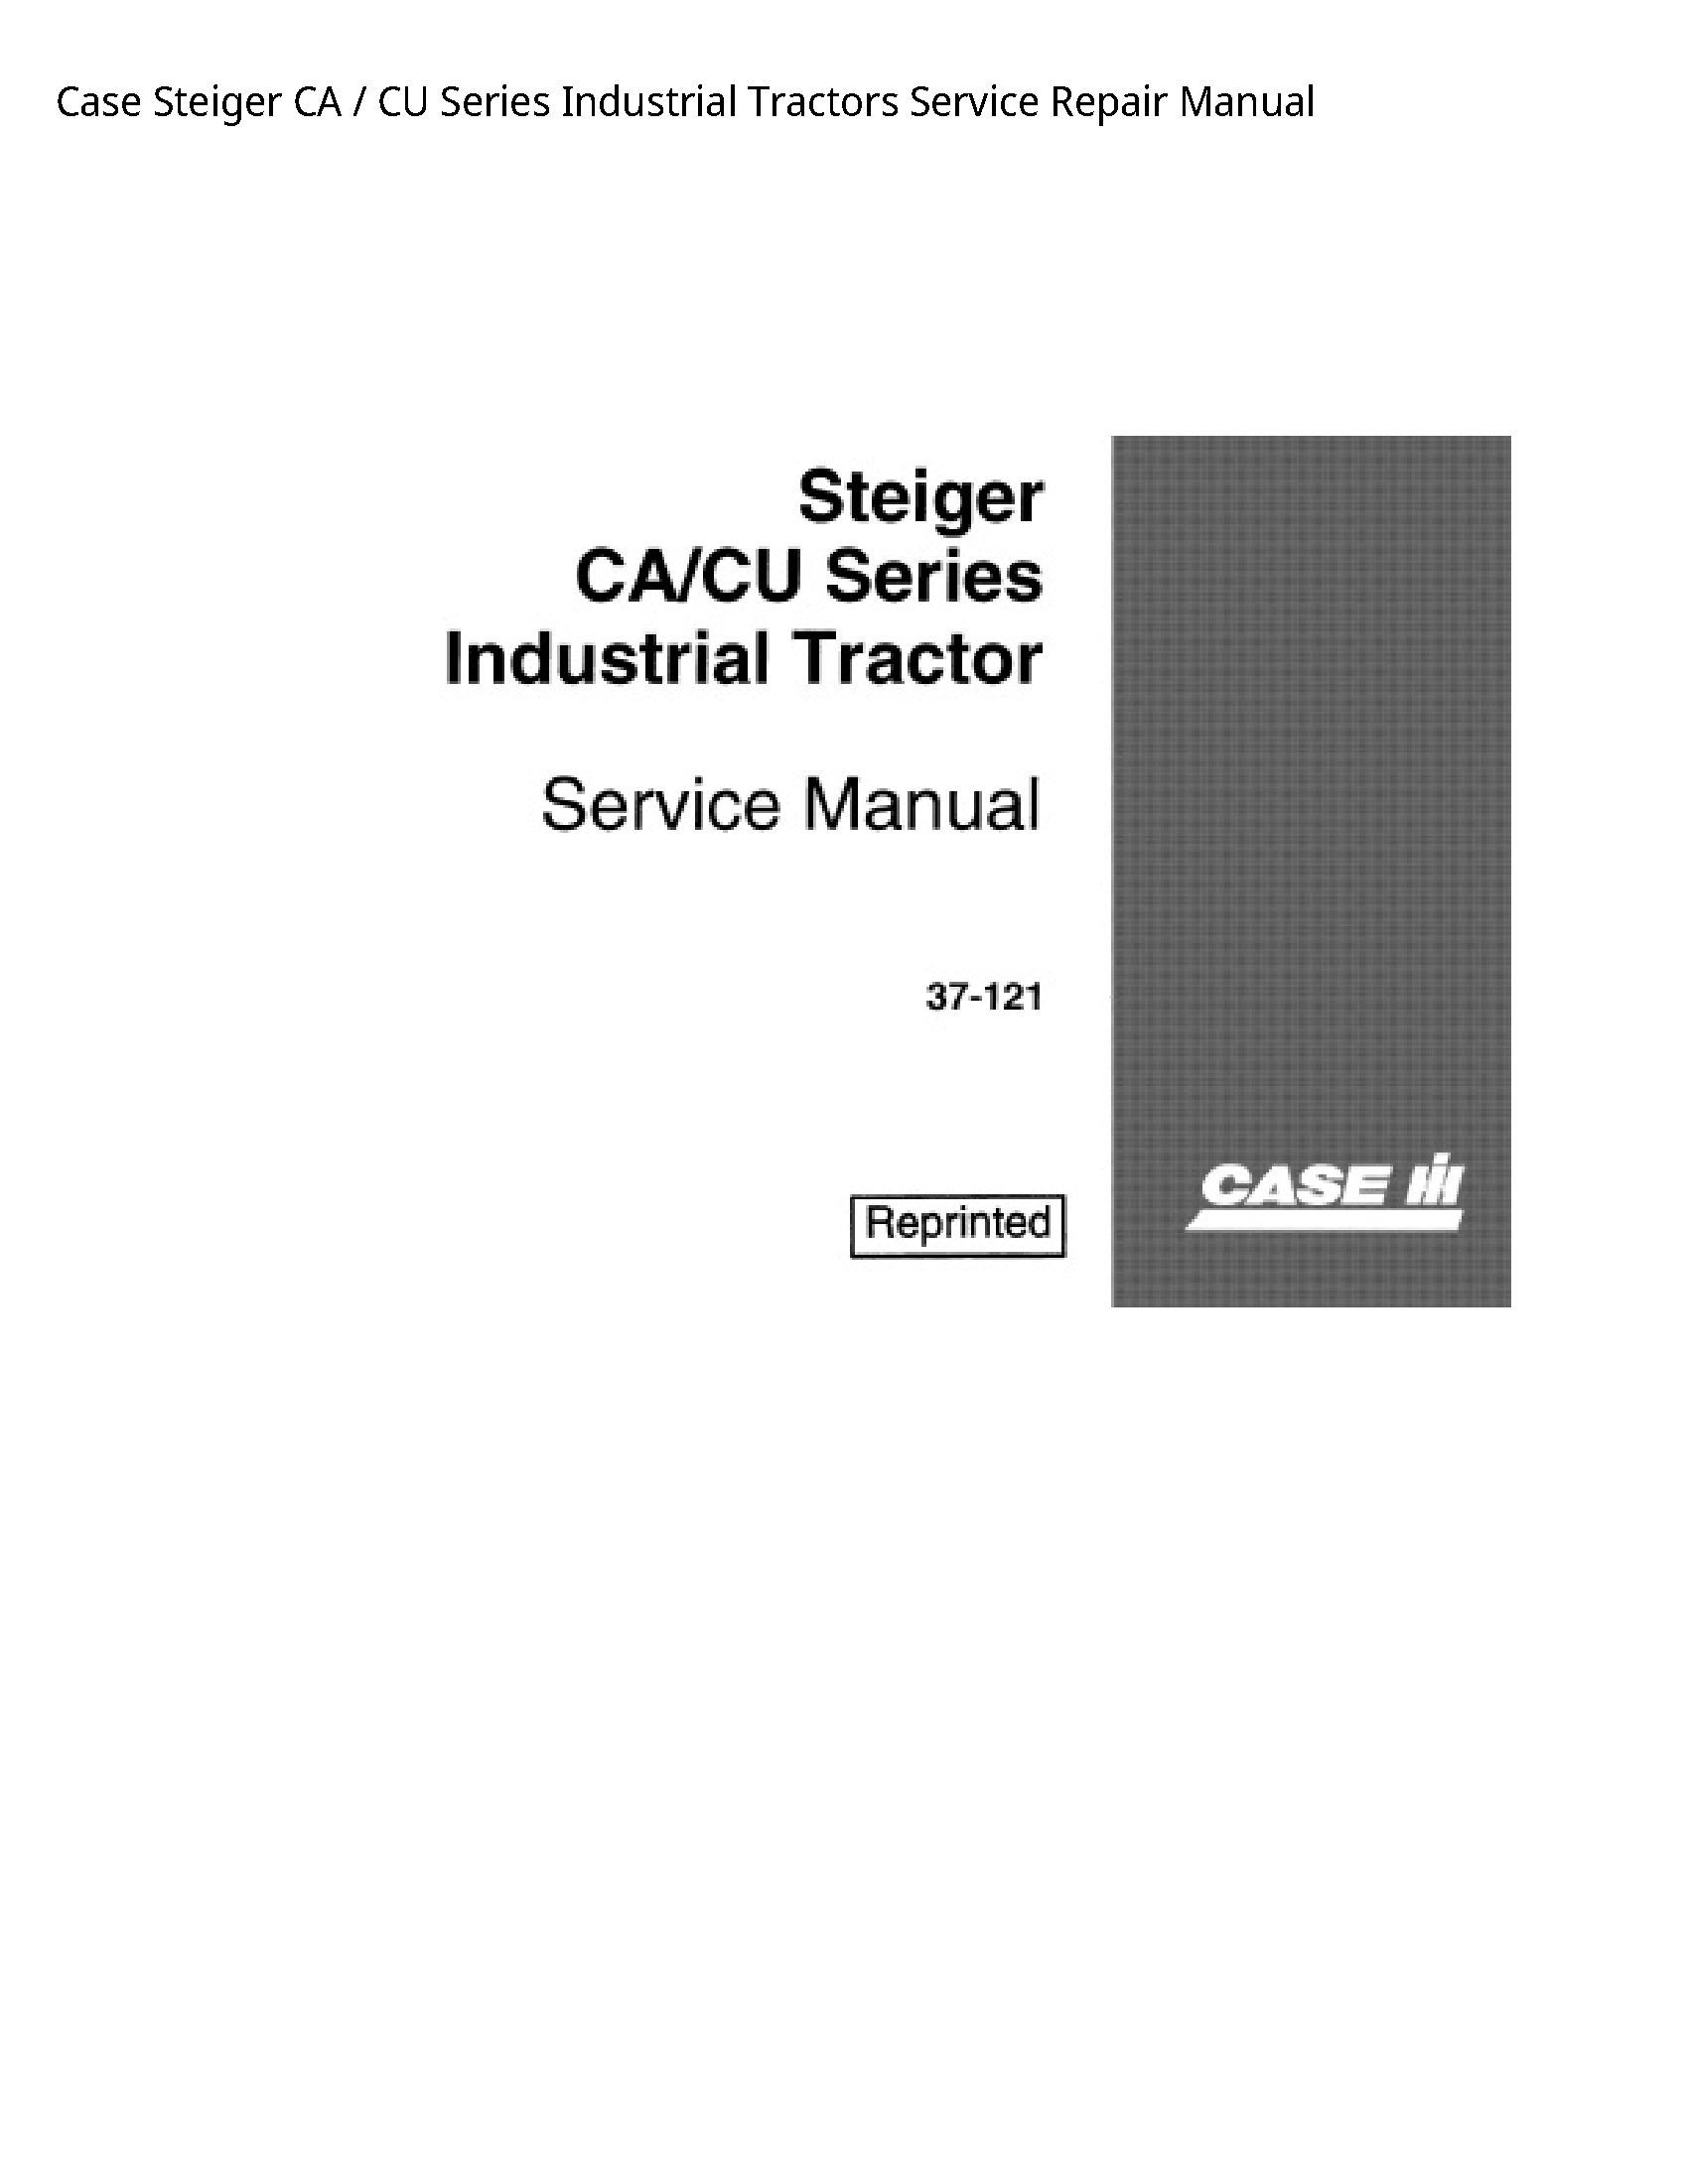 Case/Case IH Steiger CA CU Series Industrial Tractors manual